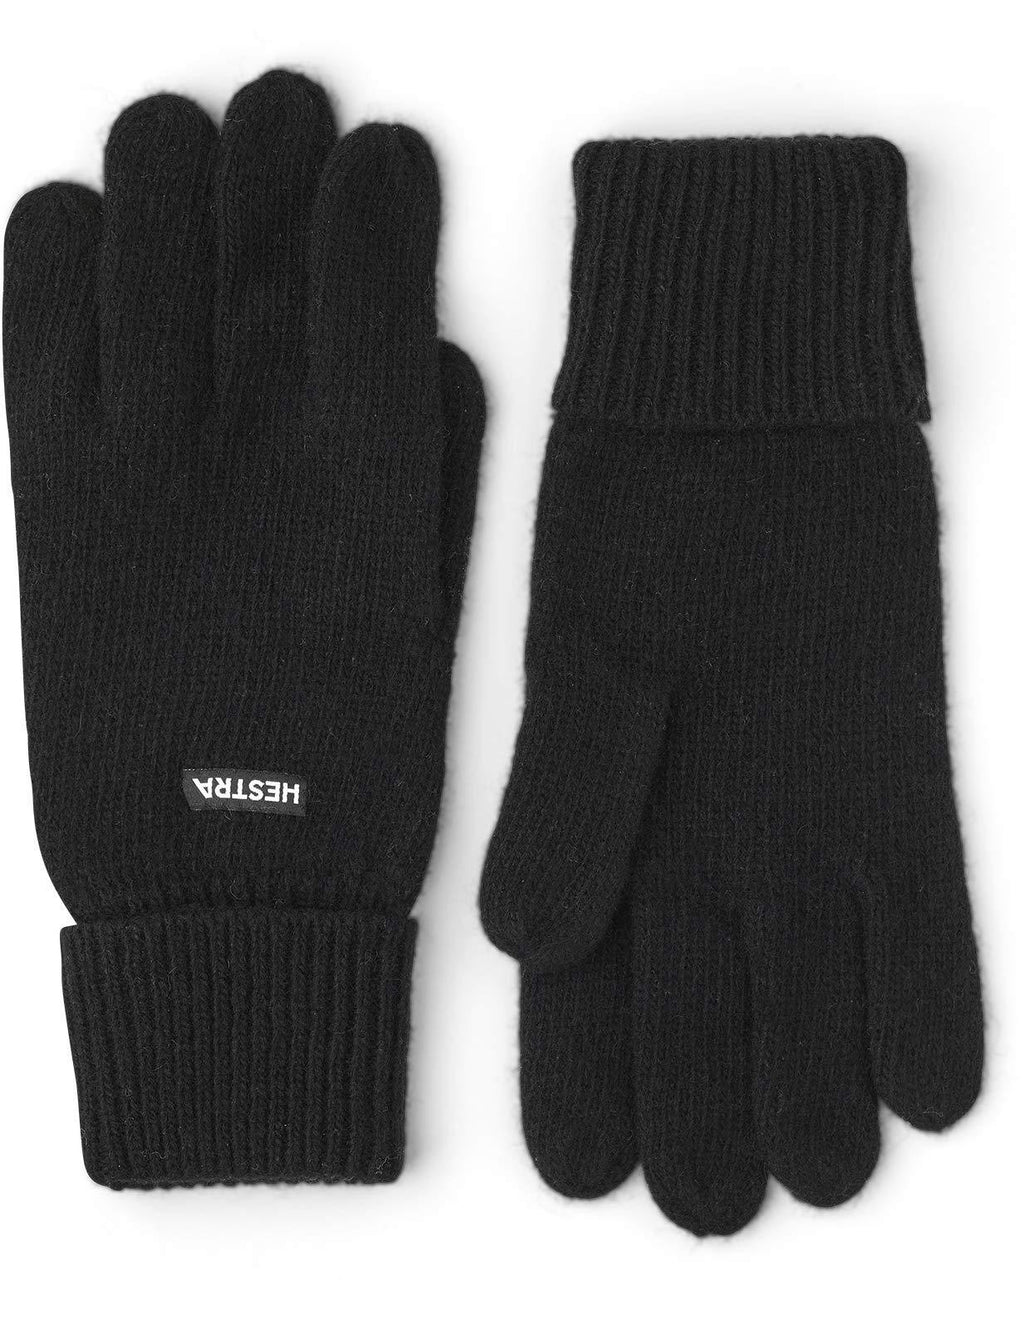 [Australia] - Hestra Pancho Liner Glove Black 5 